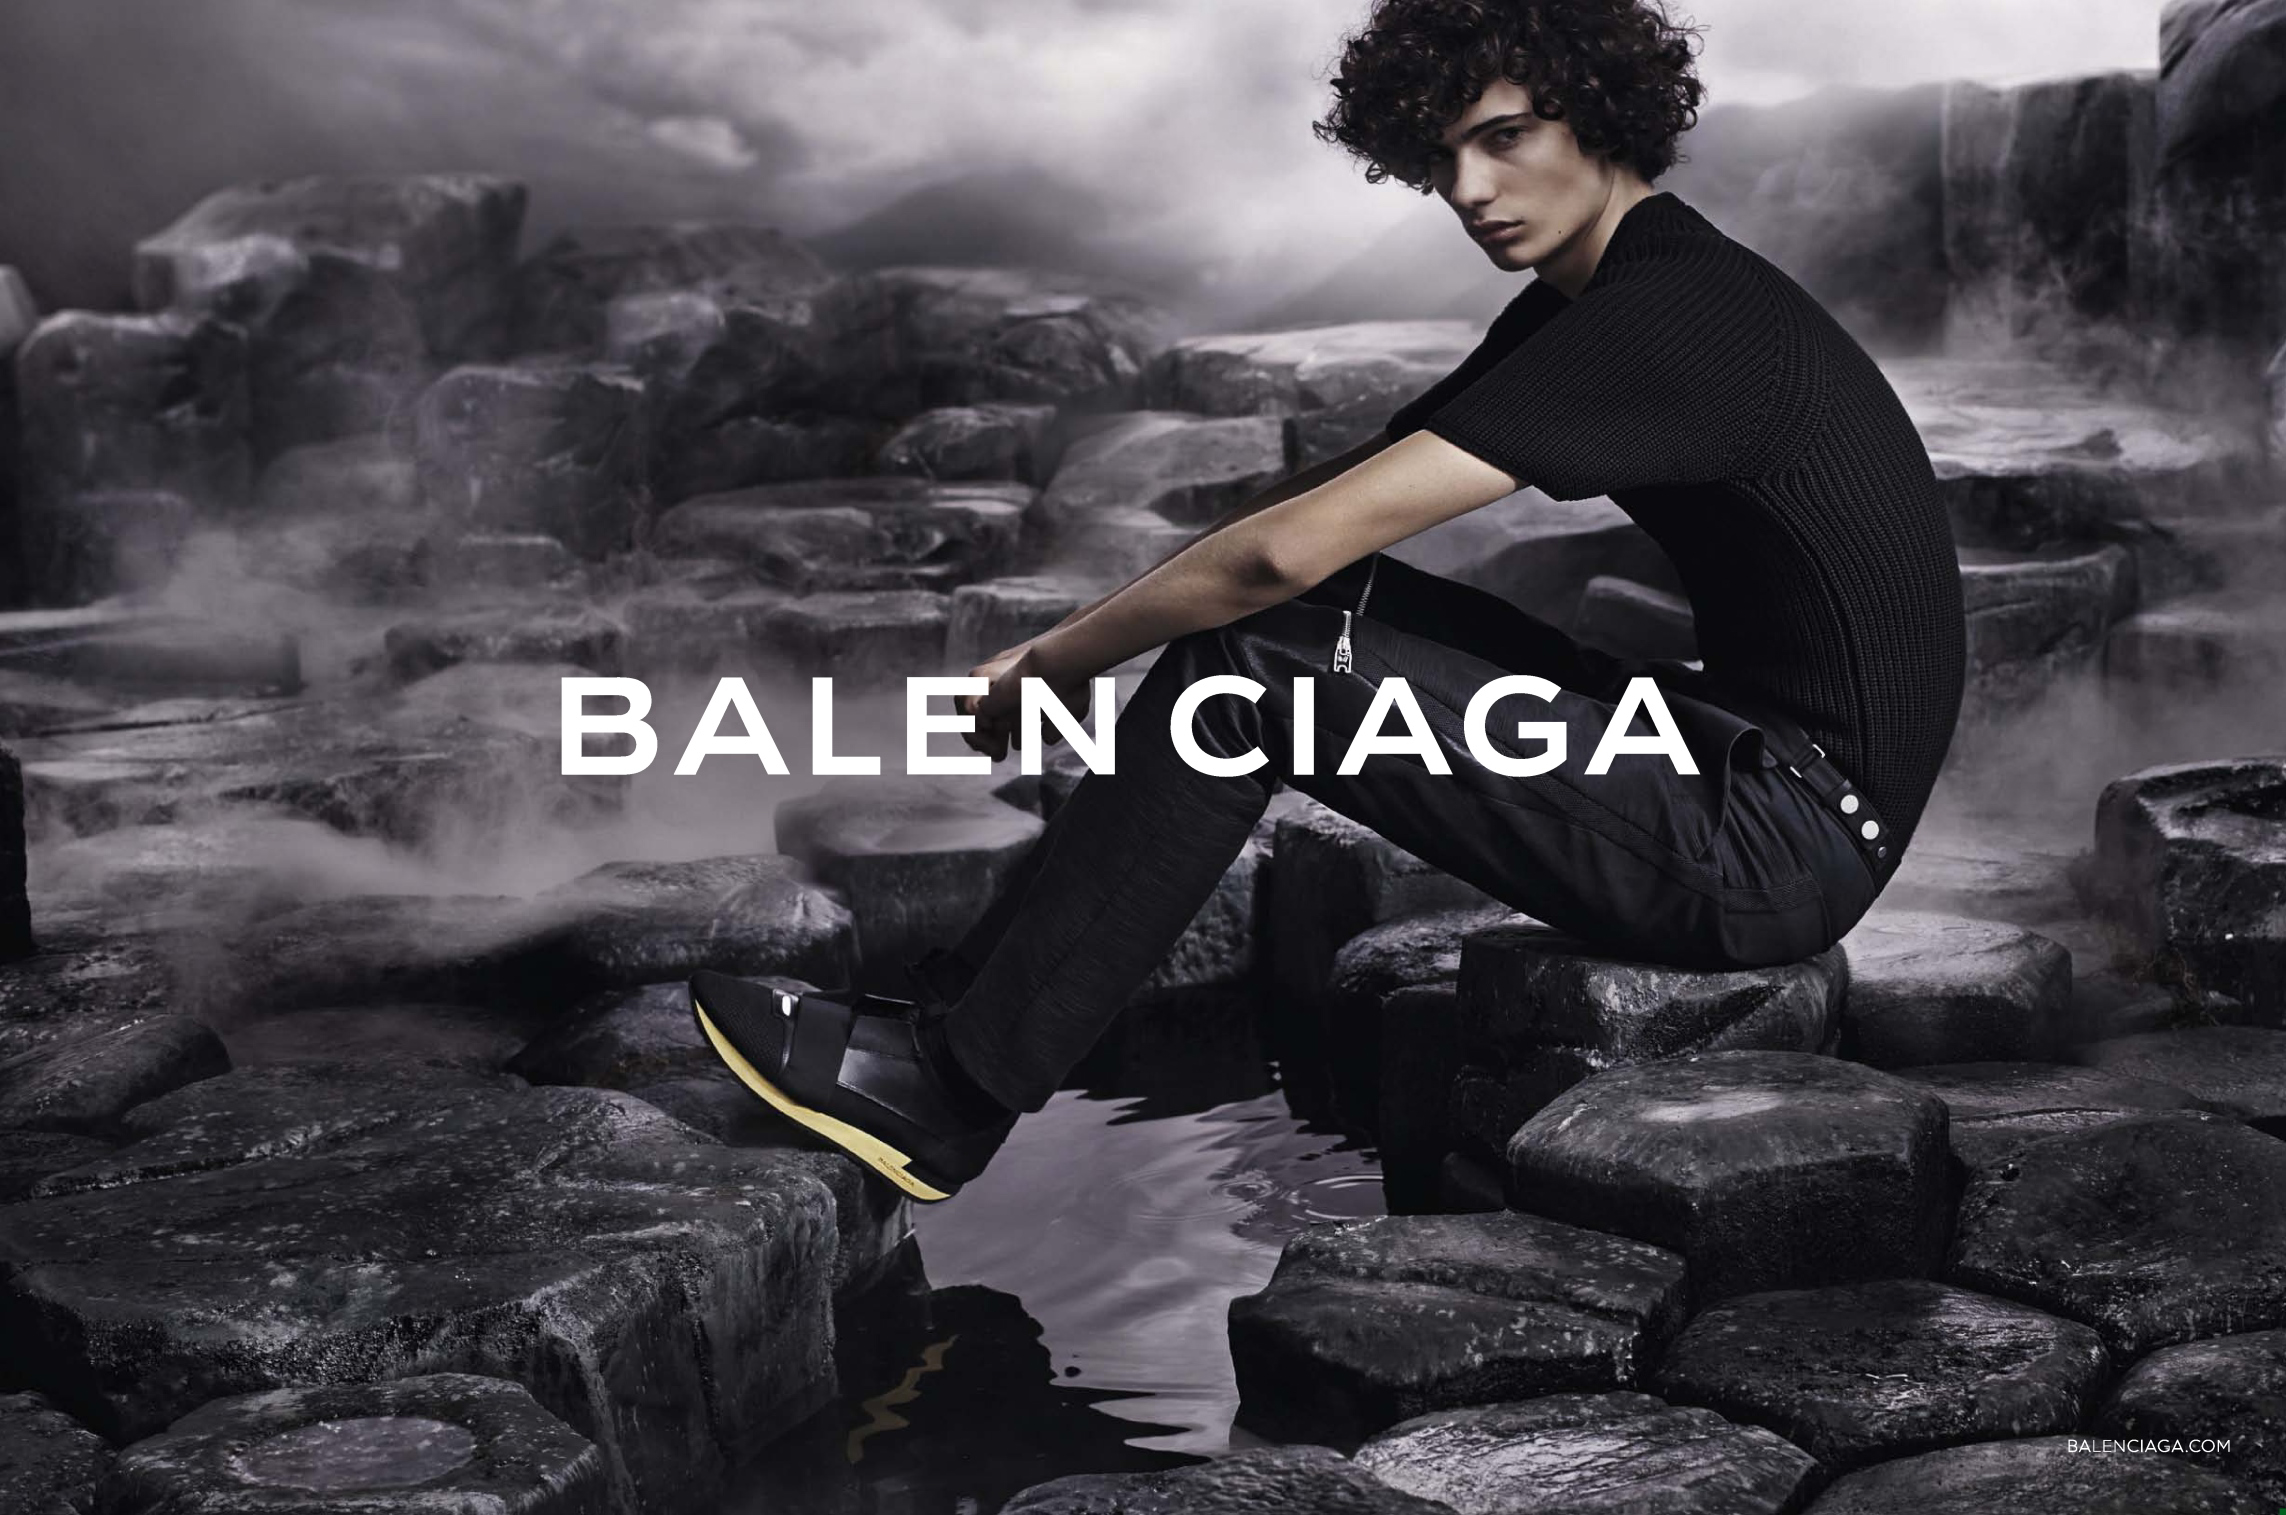 Balenciaga Goes Dark for Spring/Summer 2015 Campaign Starring Piero